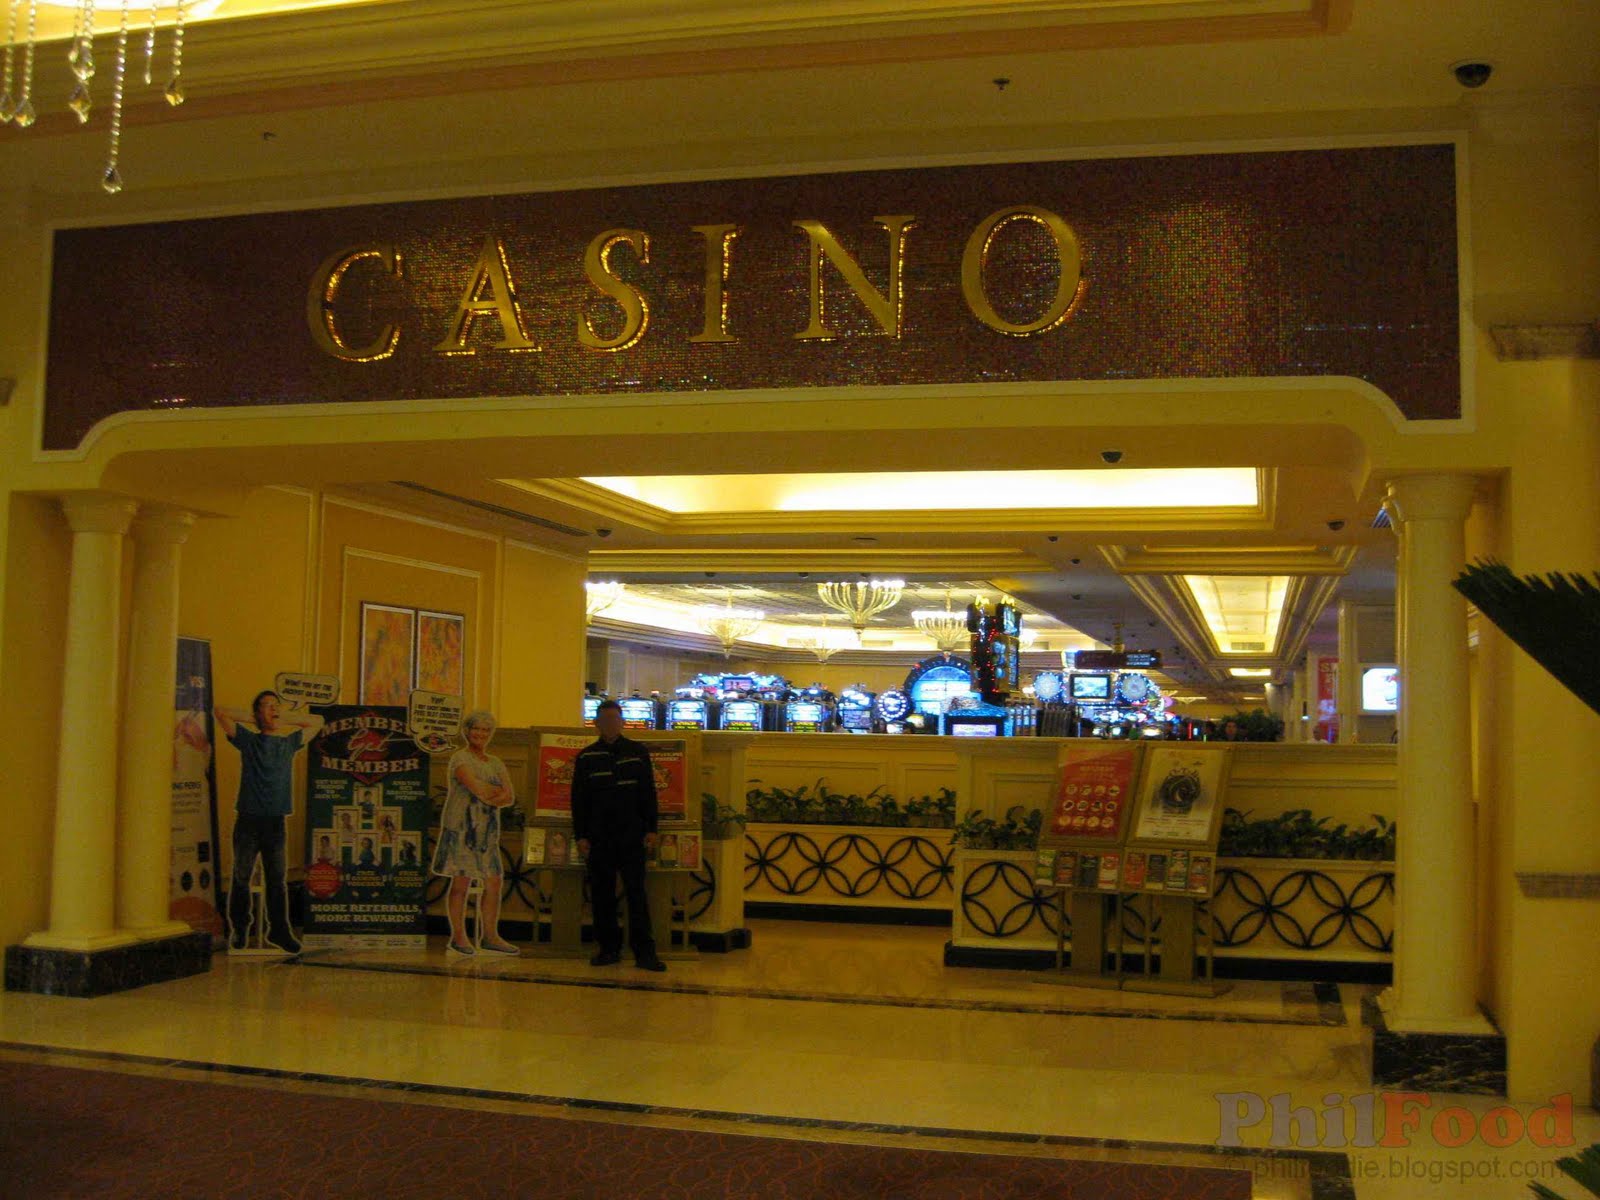 Casino At Resorts World